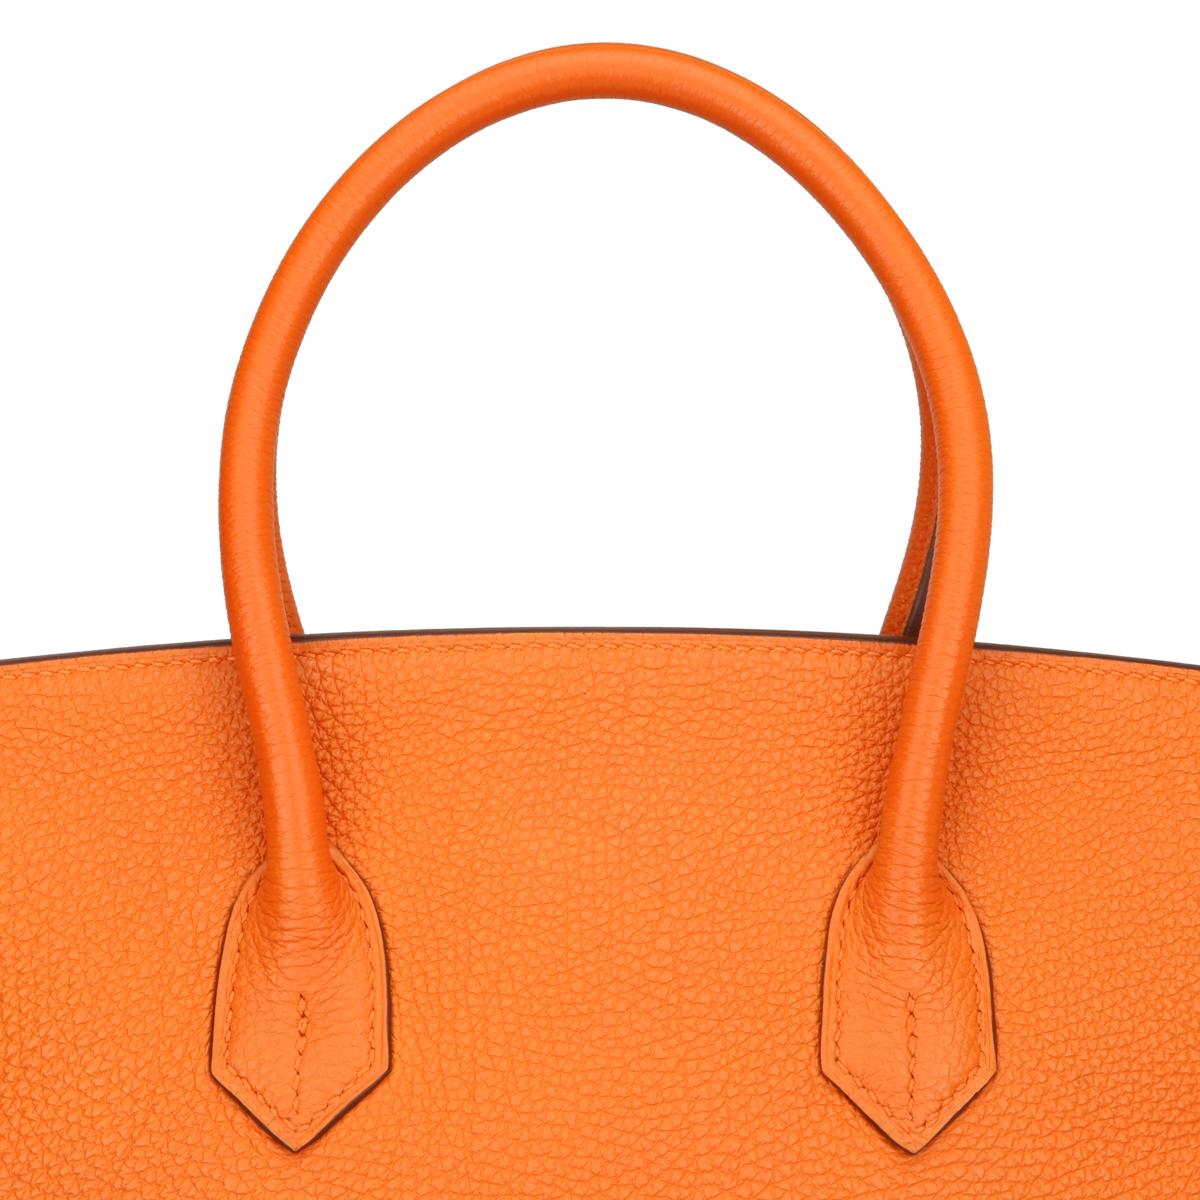 Hermès Birkin 35cm Bag Orange Togo Leather Palladium Hardware Stamp N Year 2010 8